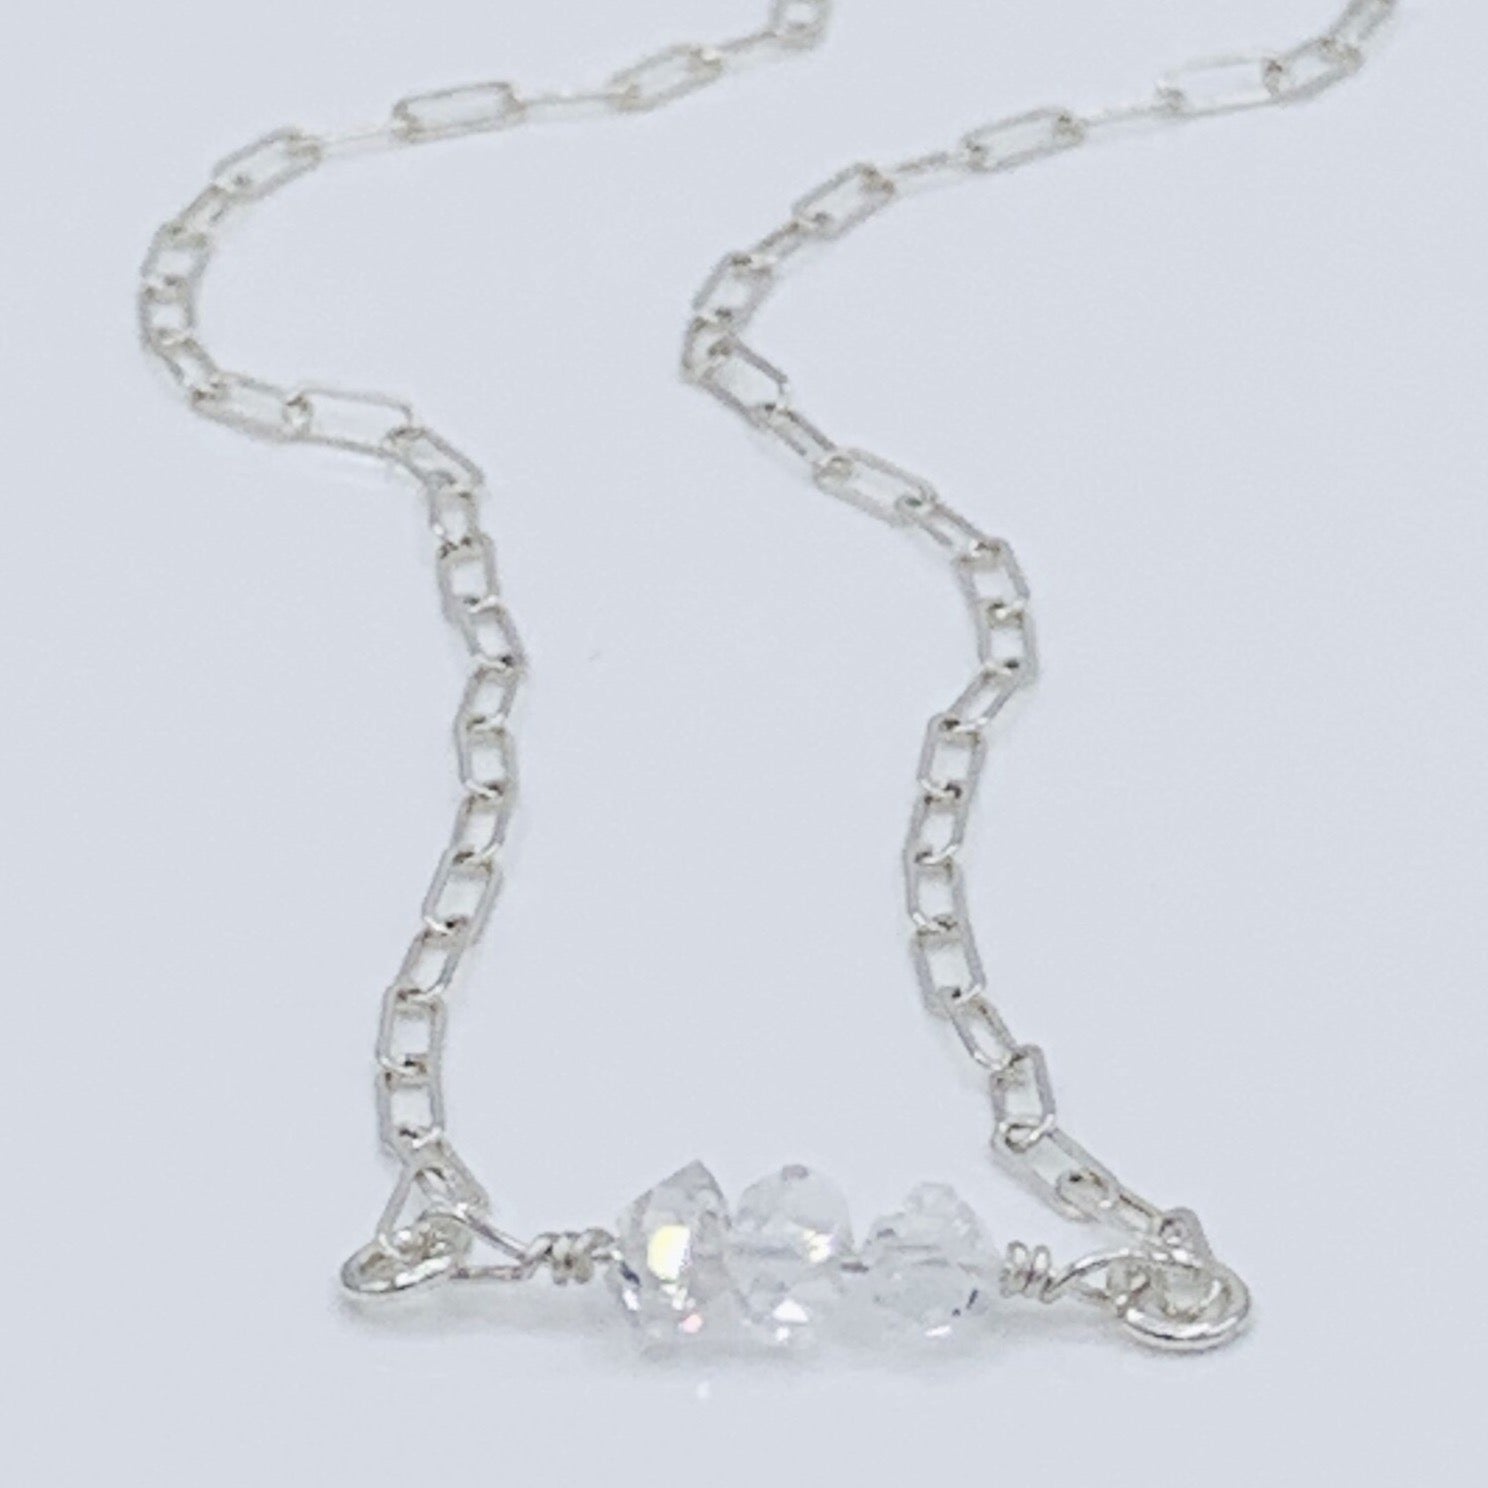 Herkimer Diamond necklace